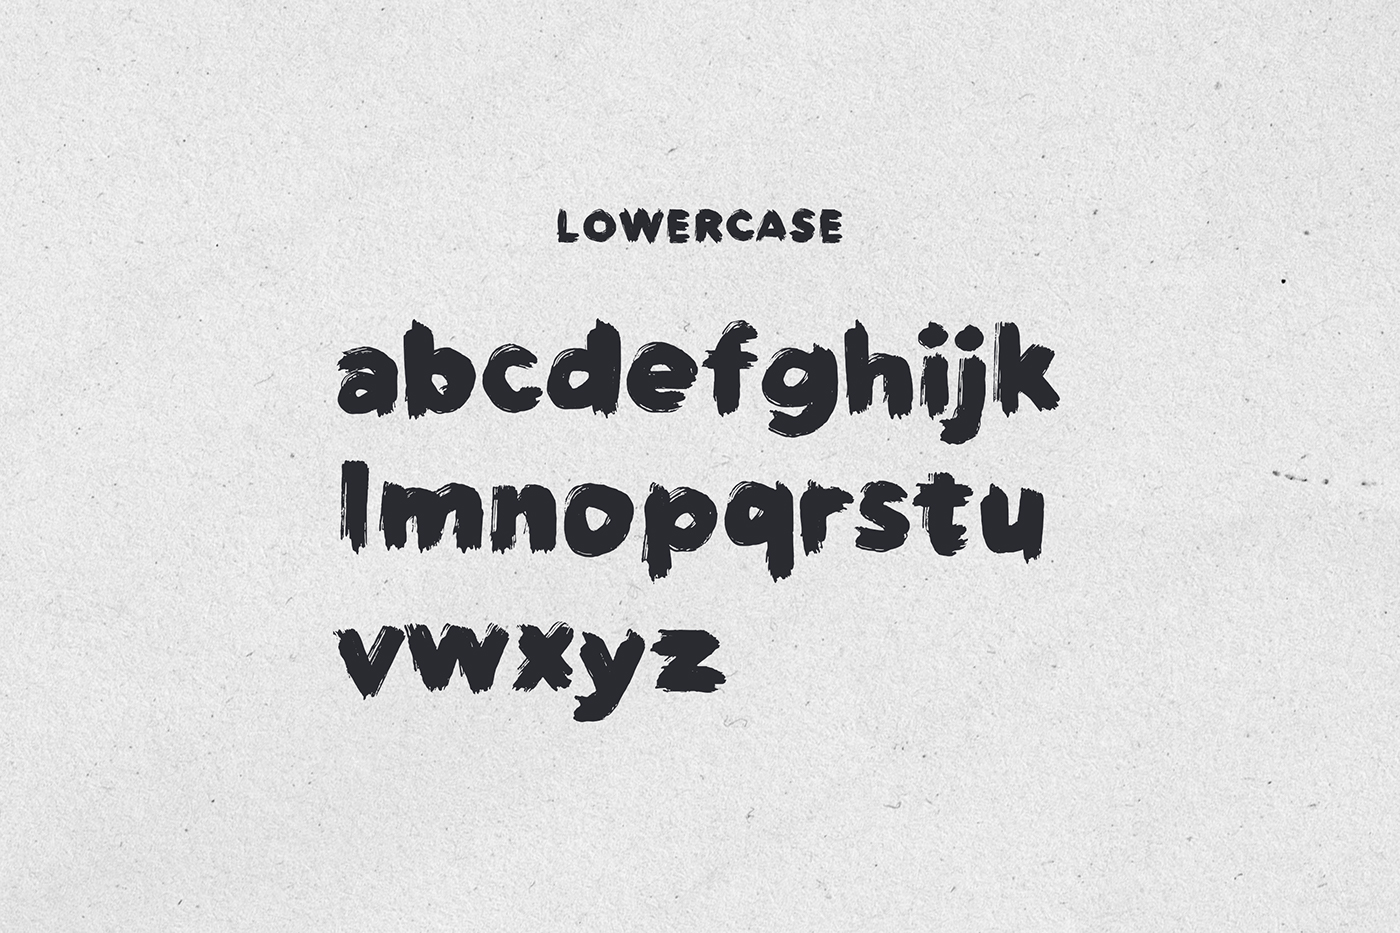 Typeface font brush script hand drawn font painted type type hand drawn type Painted textured brush